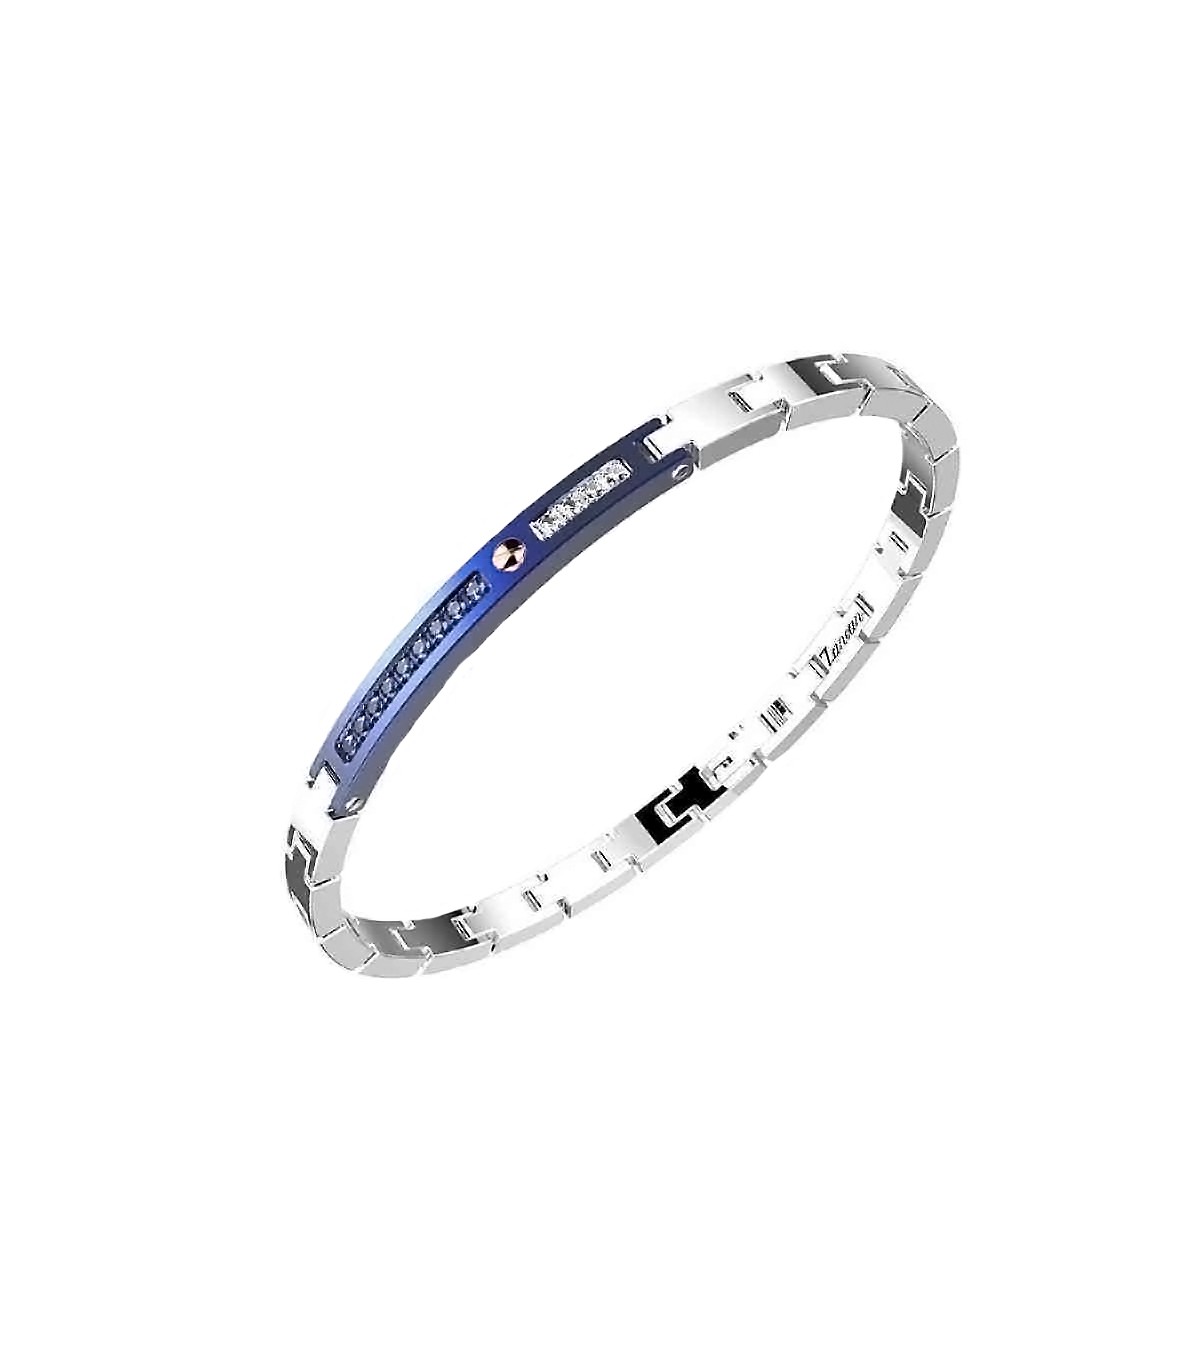 Buy ZIVOM® White Ceramic Silver 316L Stainless Steel Magnetic Bracelet For  Men at Amazon.in